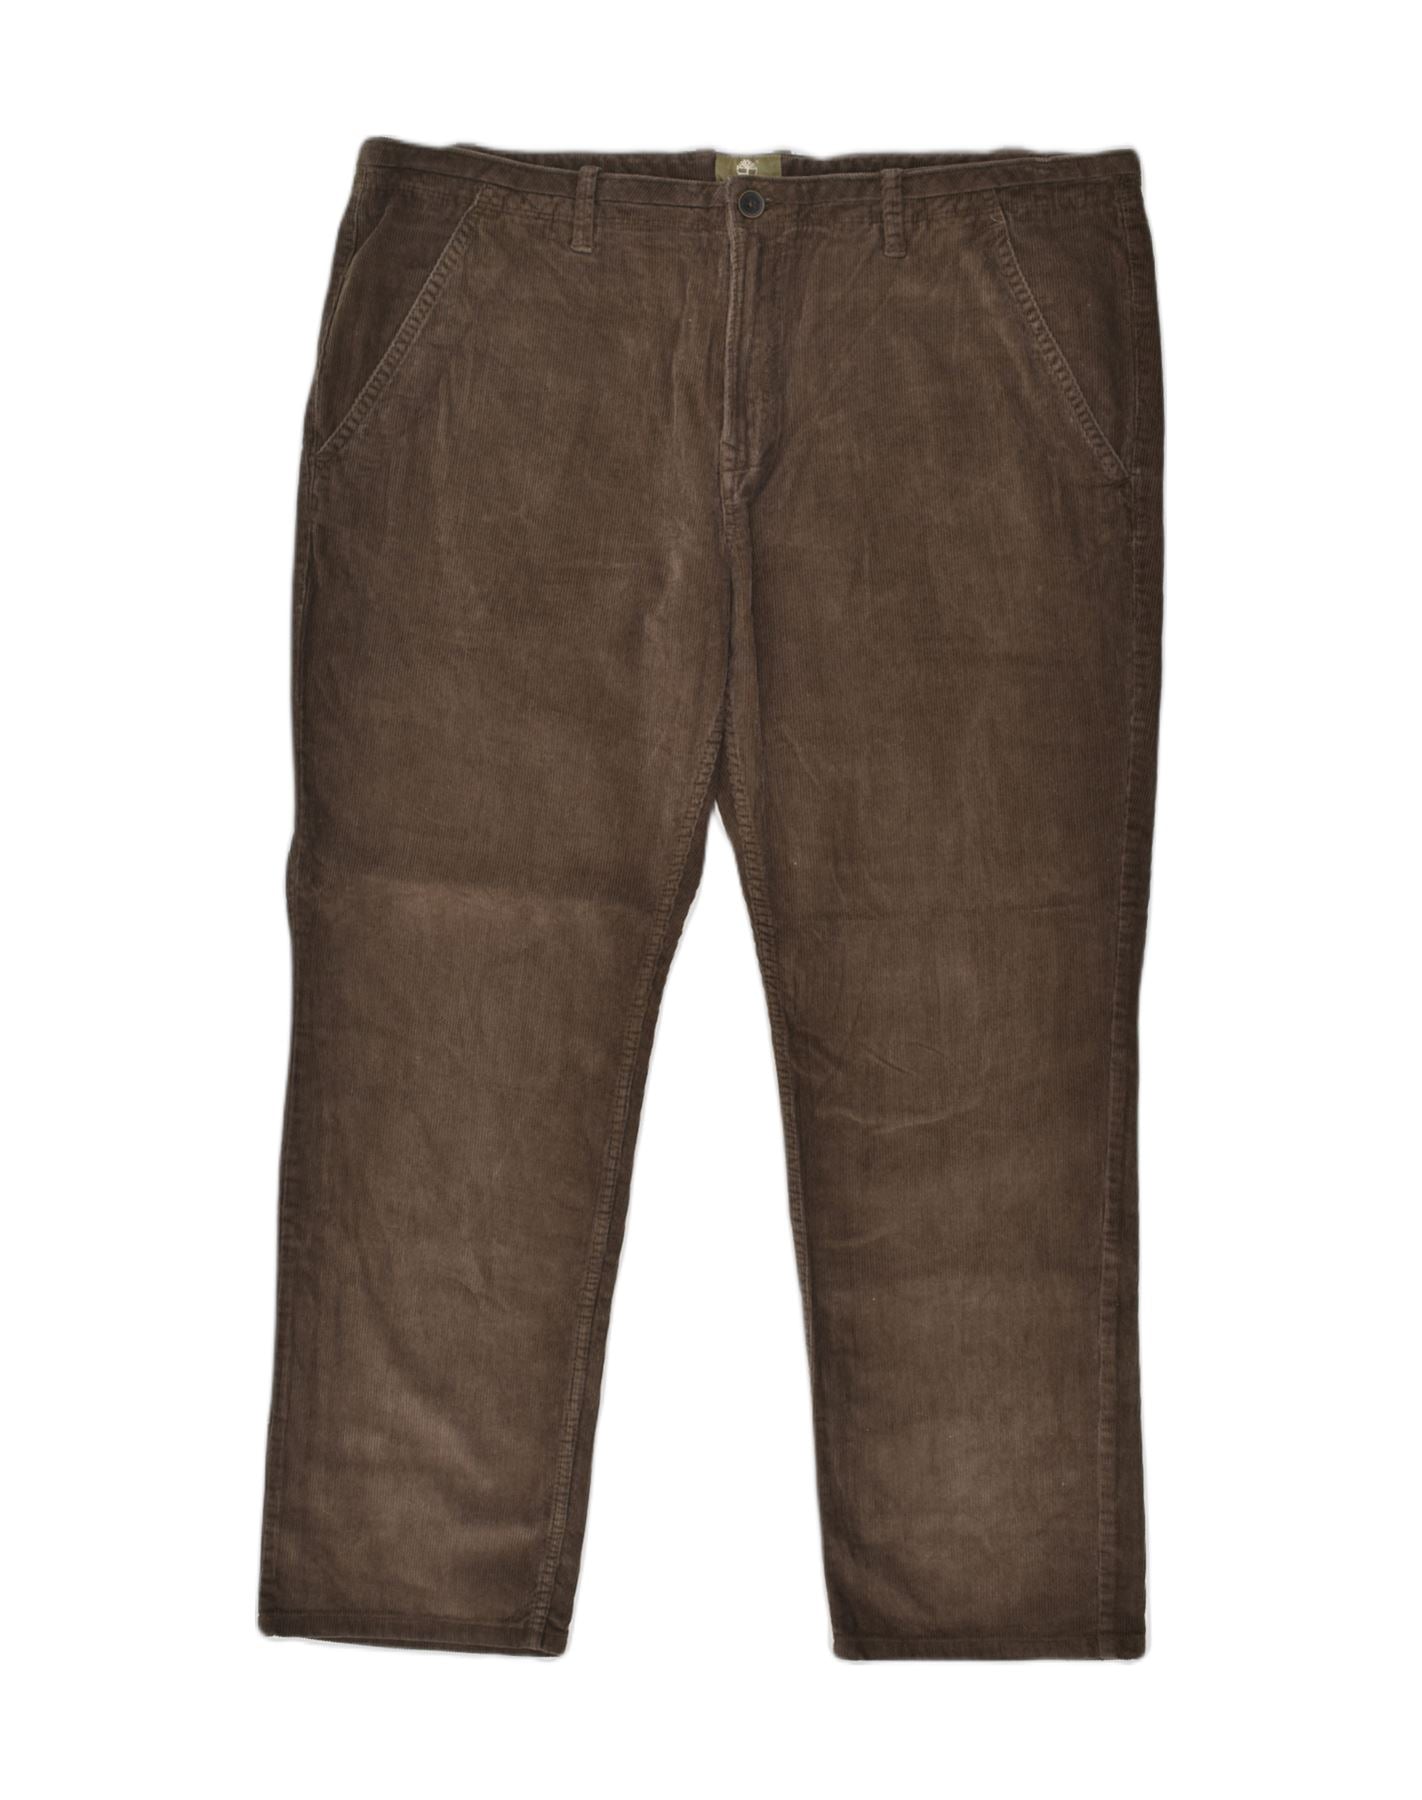 Timberland Pro Interax Work Trousers - Graphite Grey | ITS.co.uk|